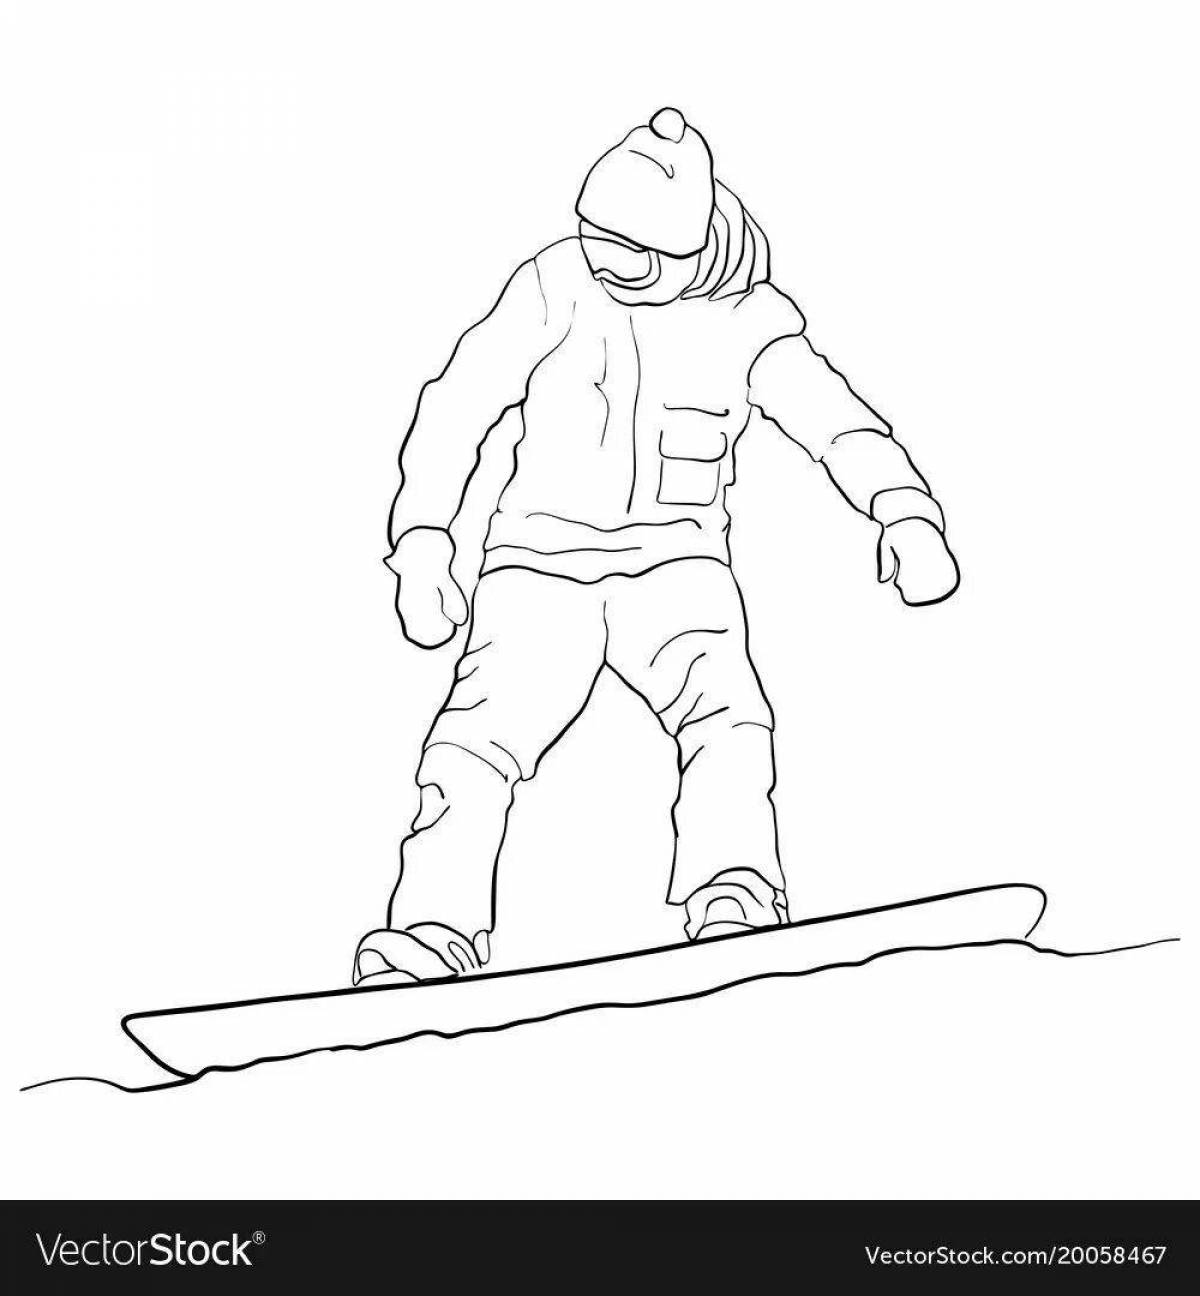 Coloring book agile snowboarder